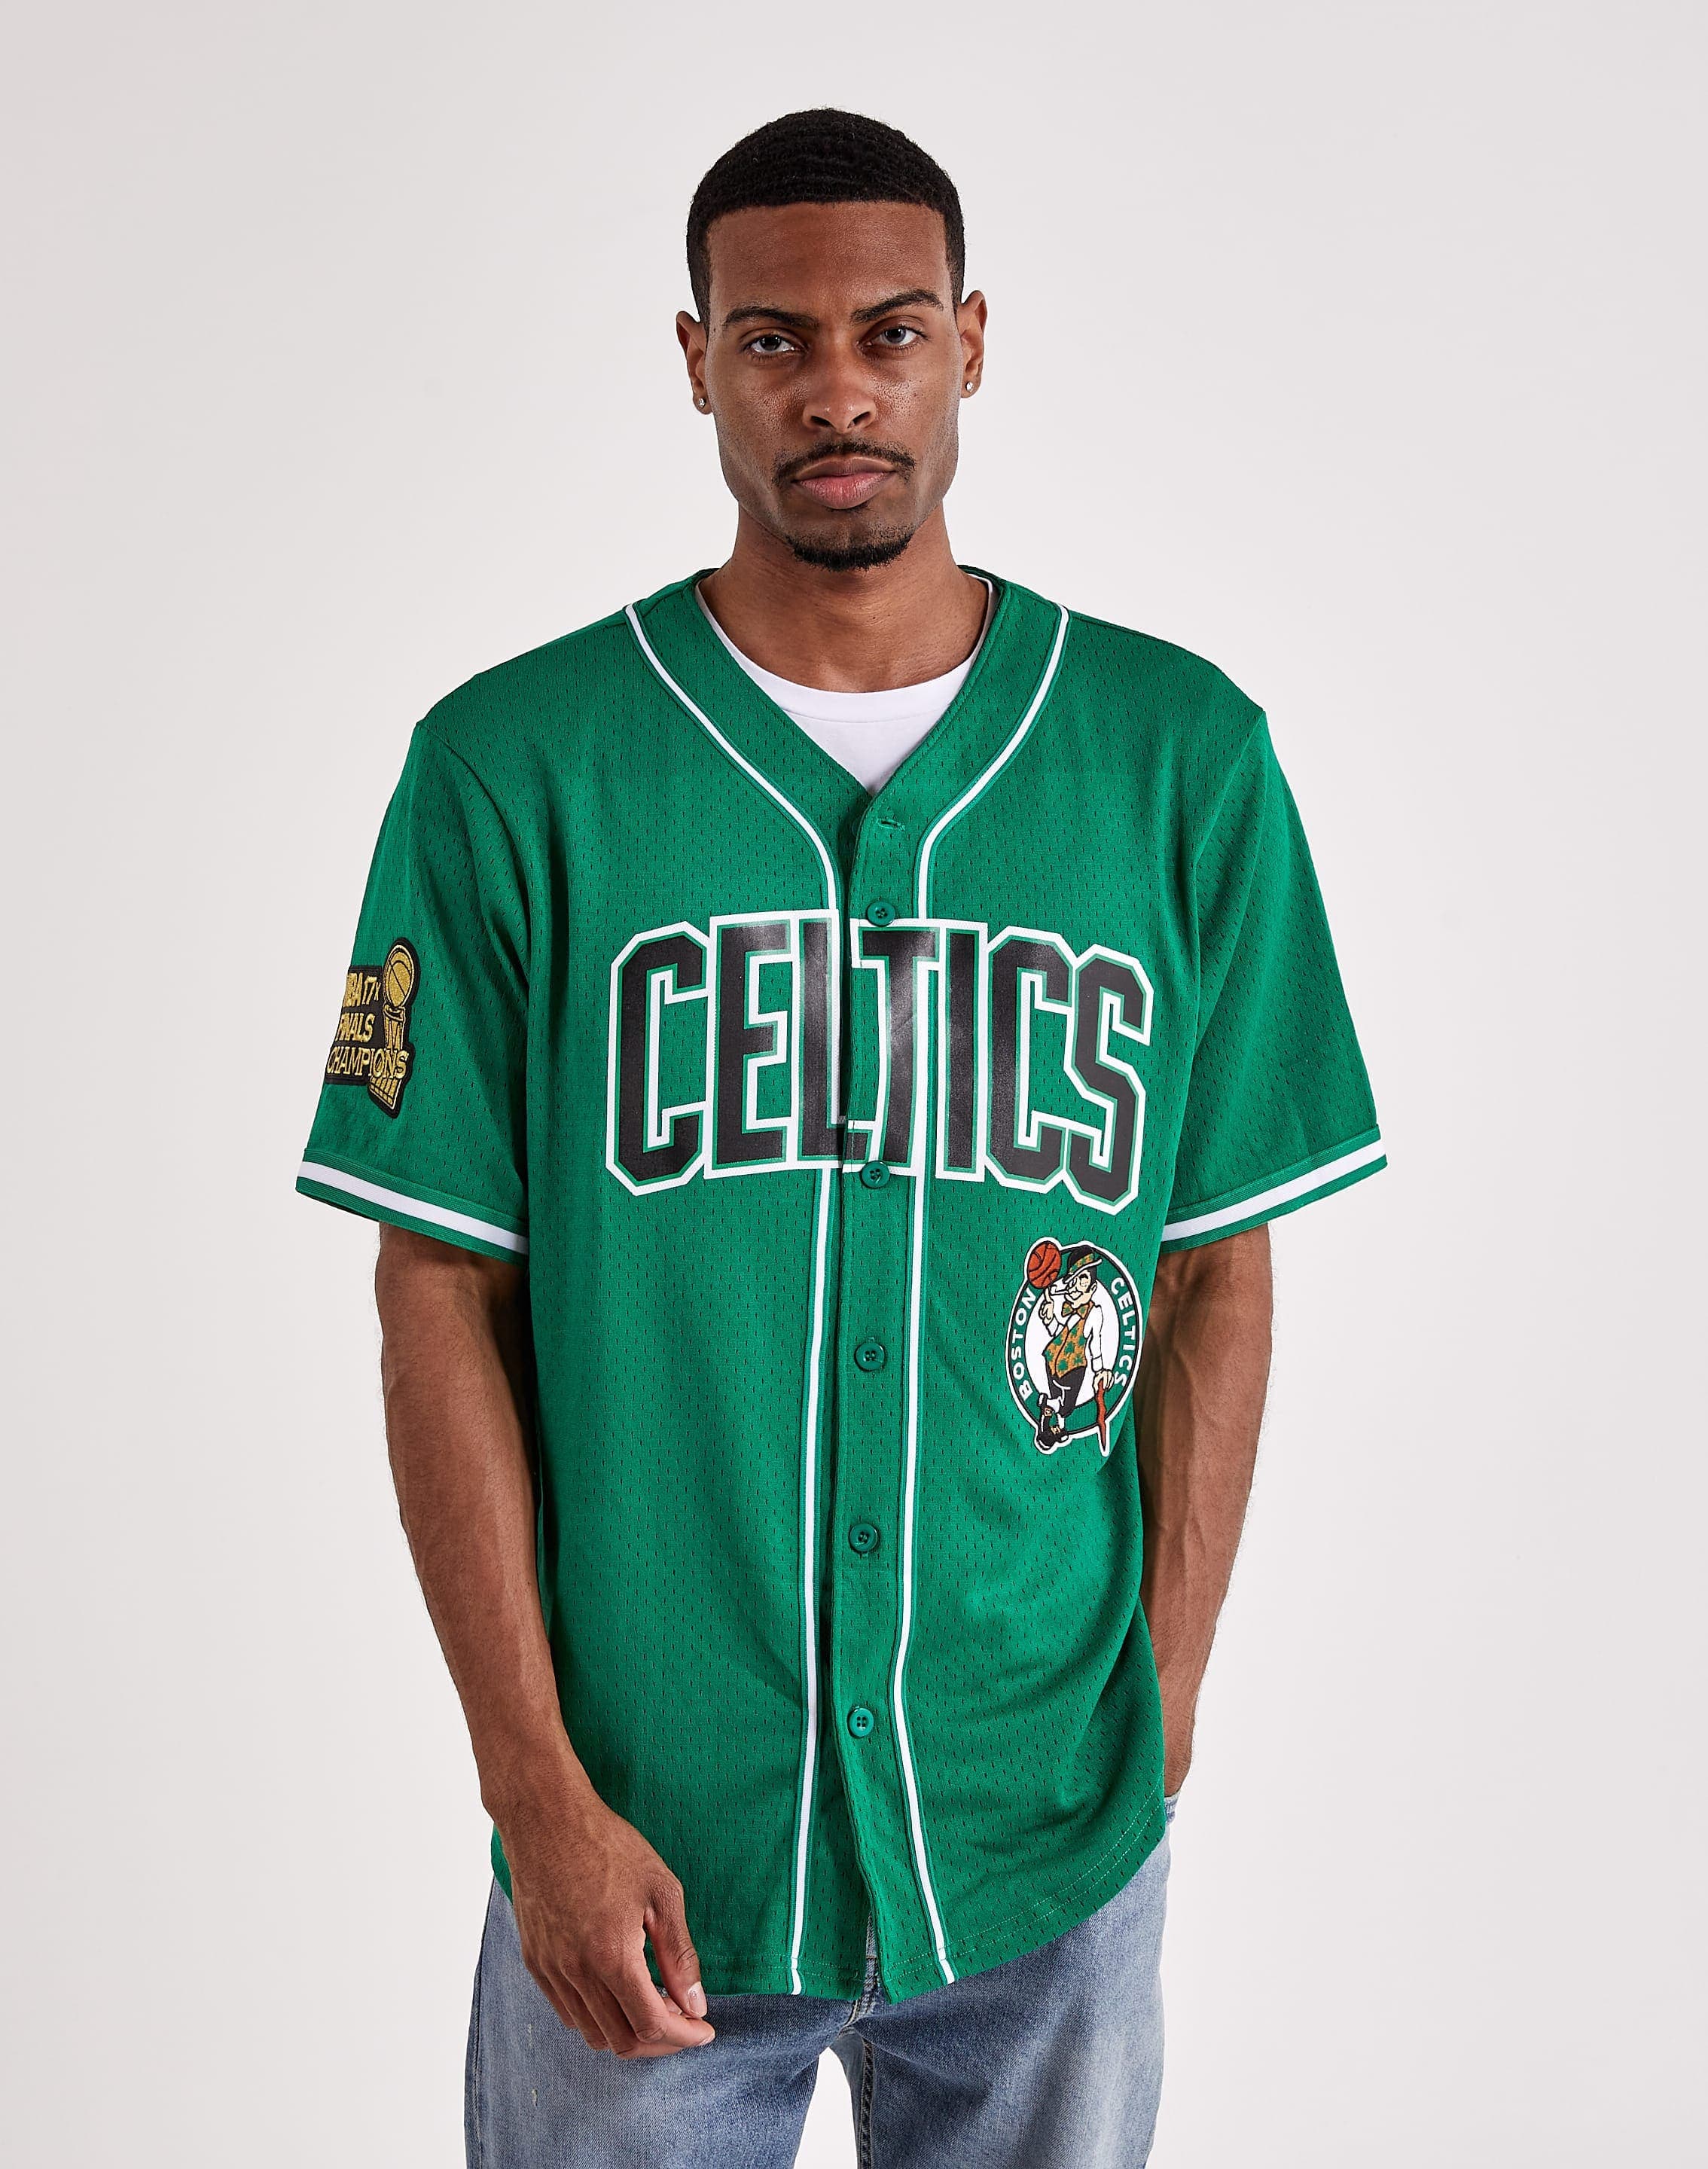 Boston Celtics Gear, Celtics Jerseys, Celtics Shop, Apparel